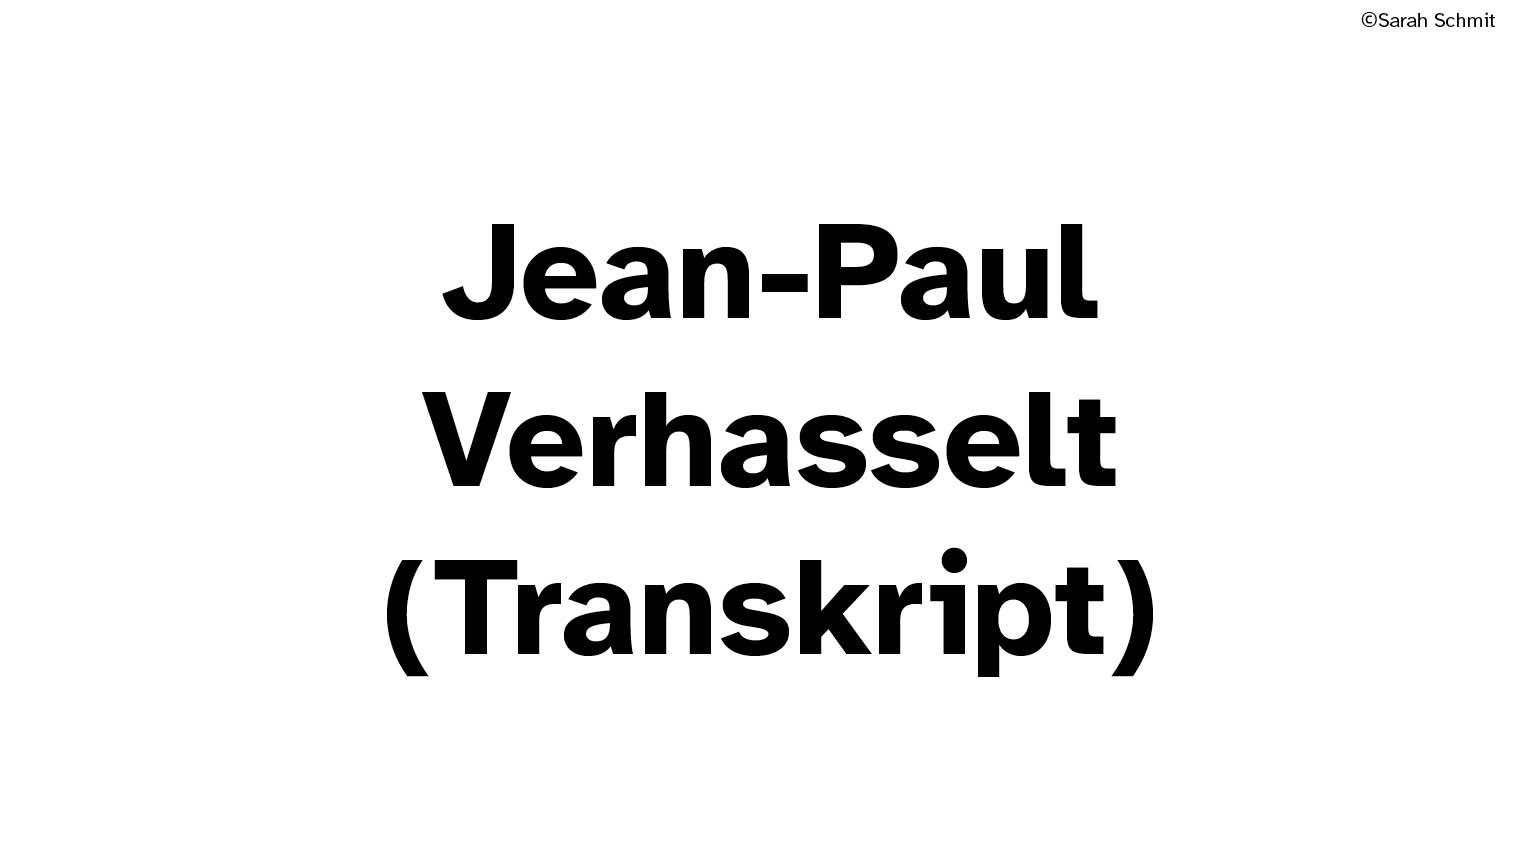 Jean-Paul Verhasselt